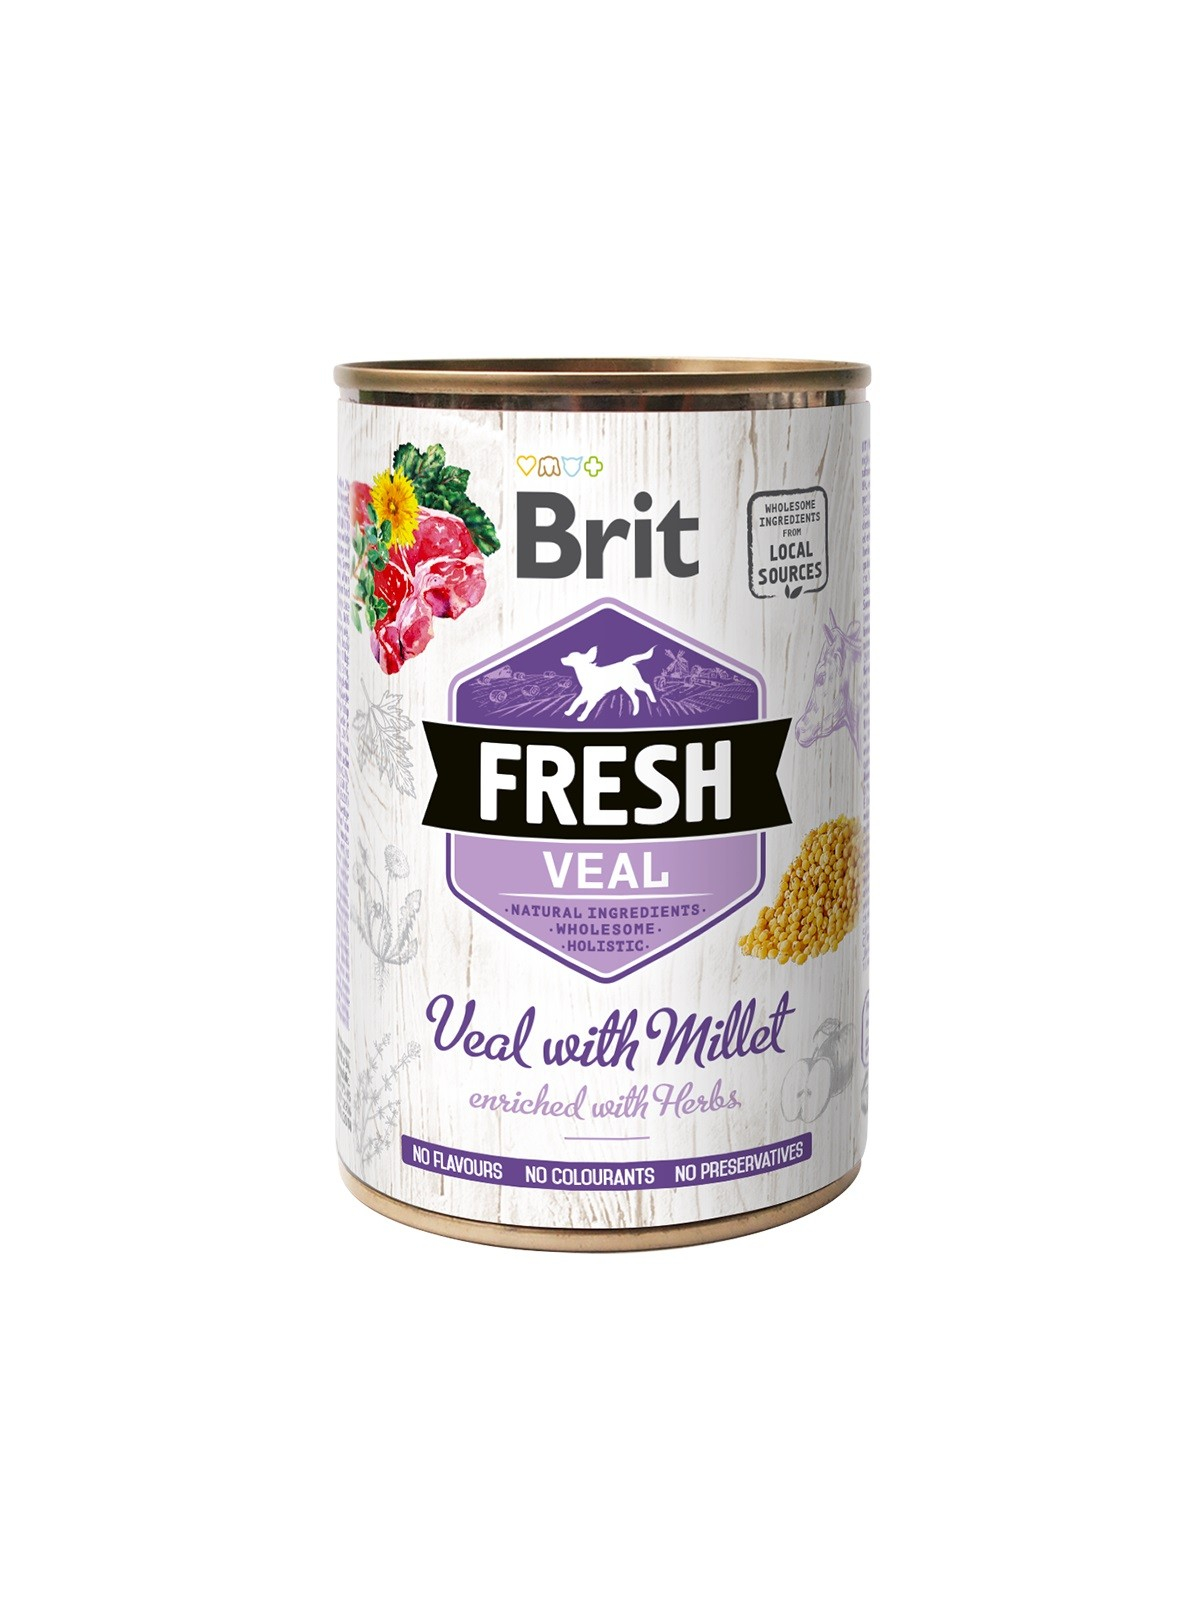 Natvoer Brit Fresh met kalfsvlees en gierst